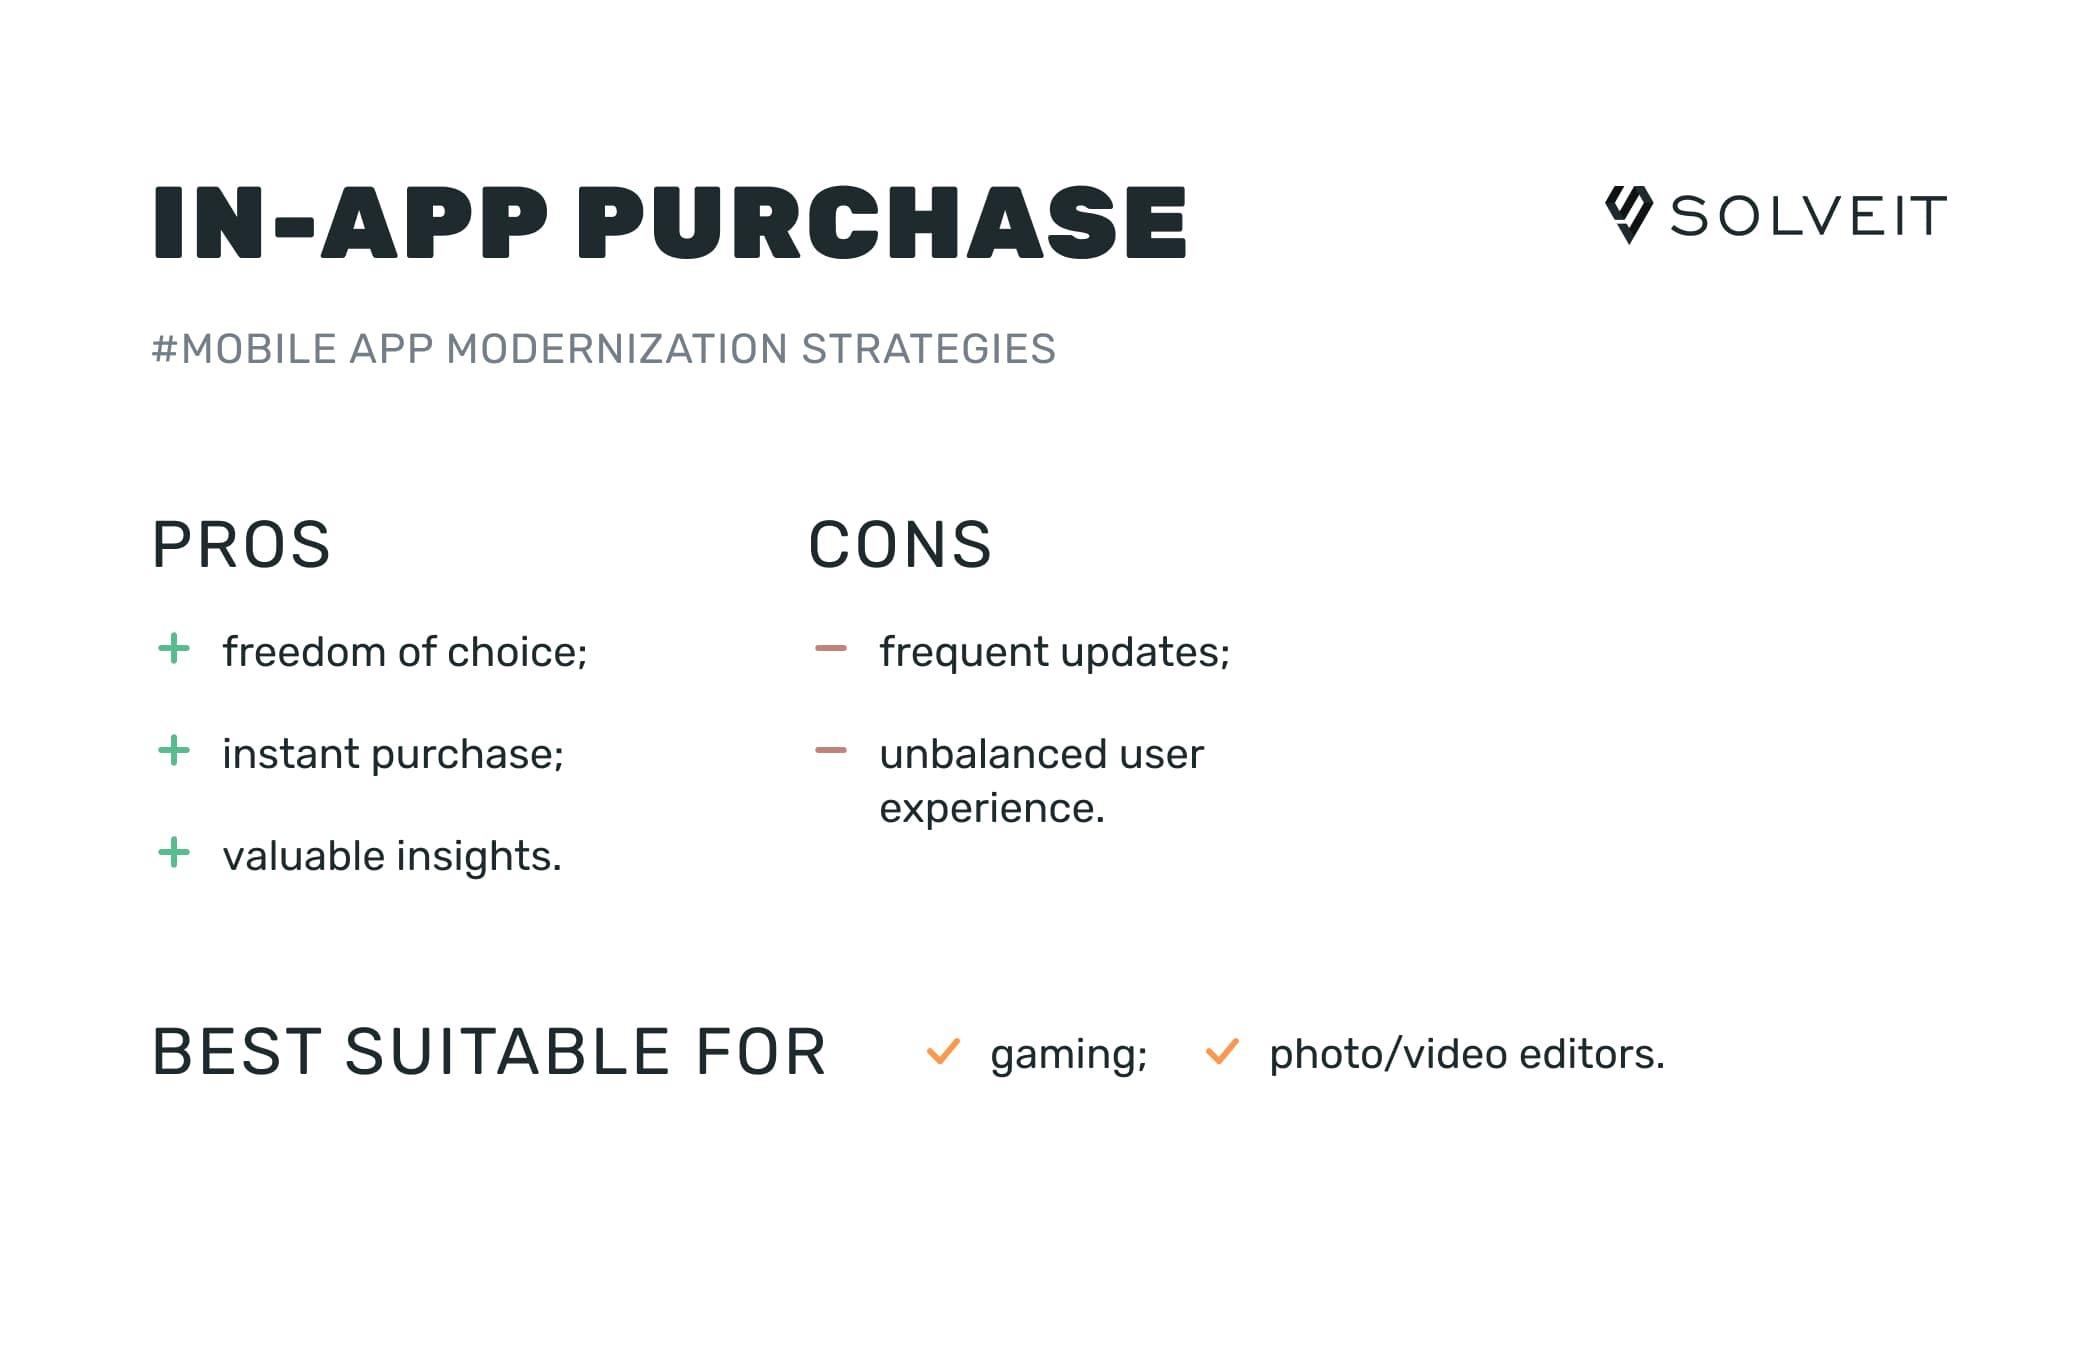 Mobile app monetization model: In-app purchase